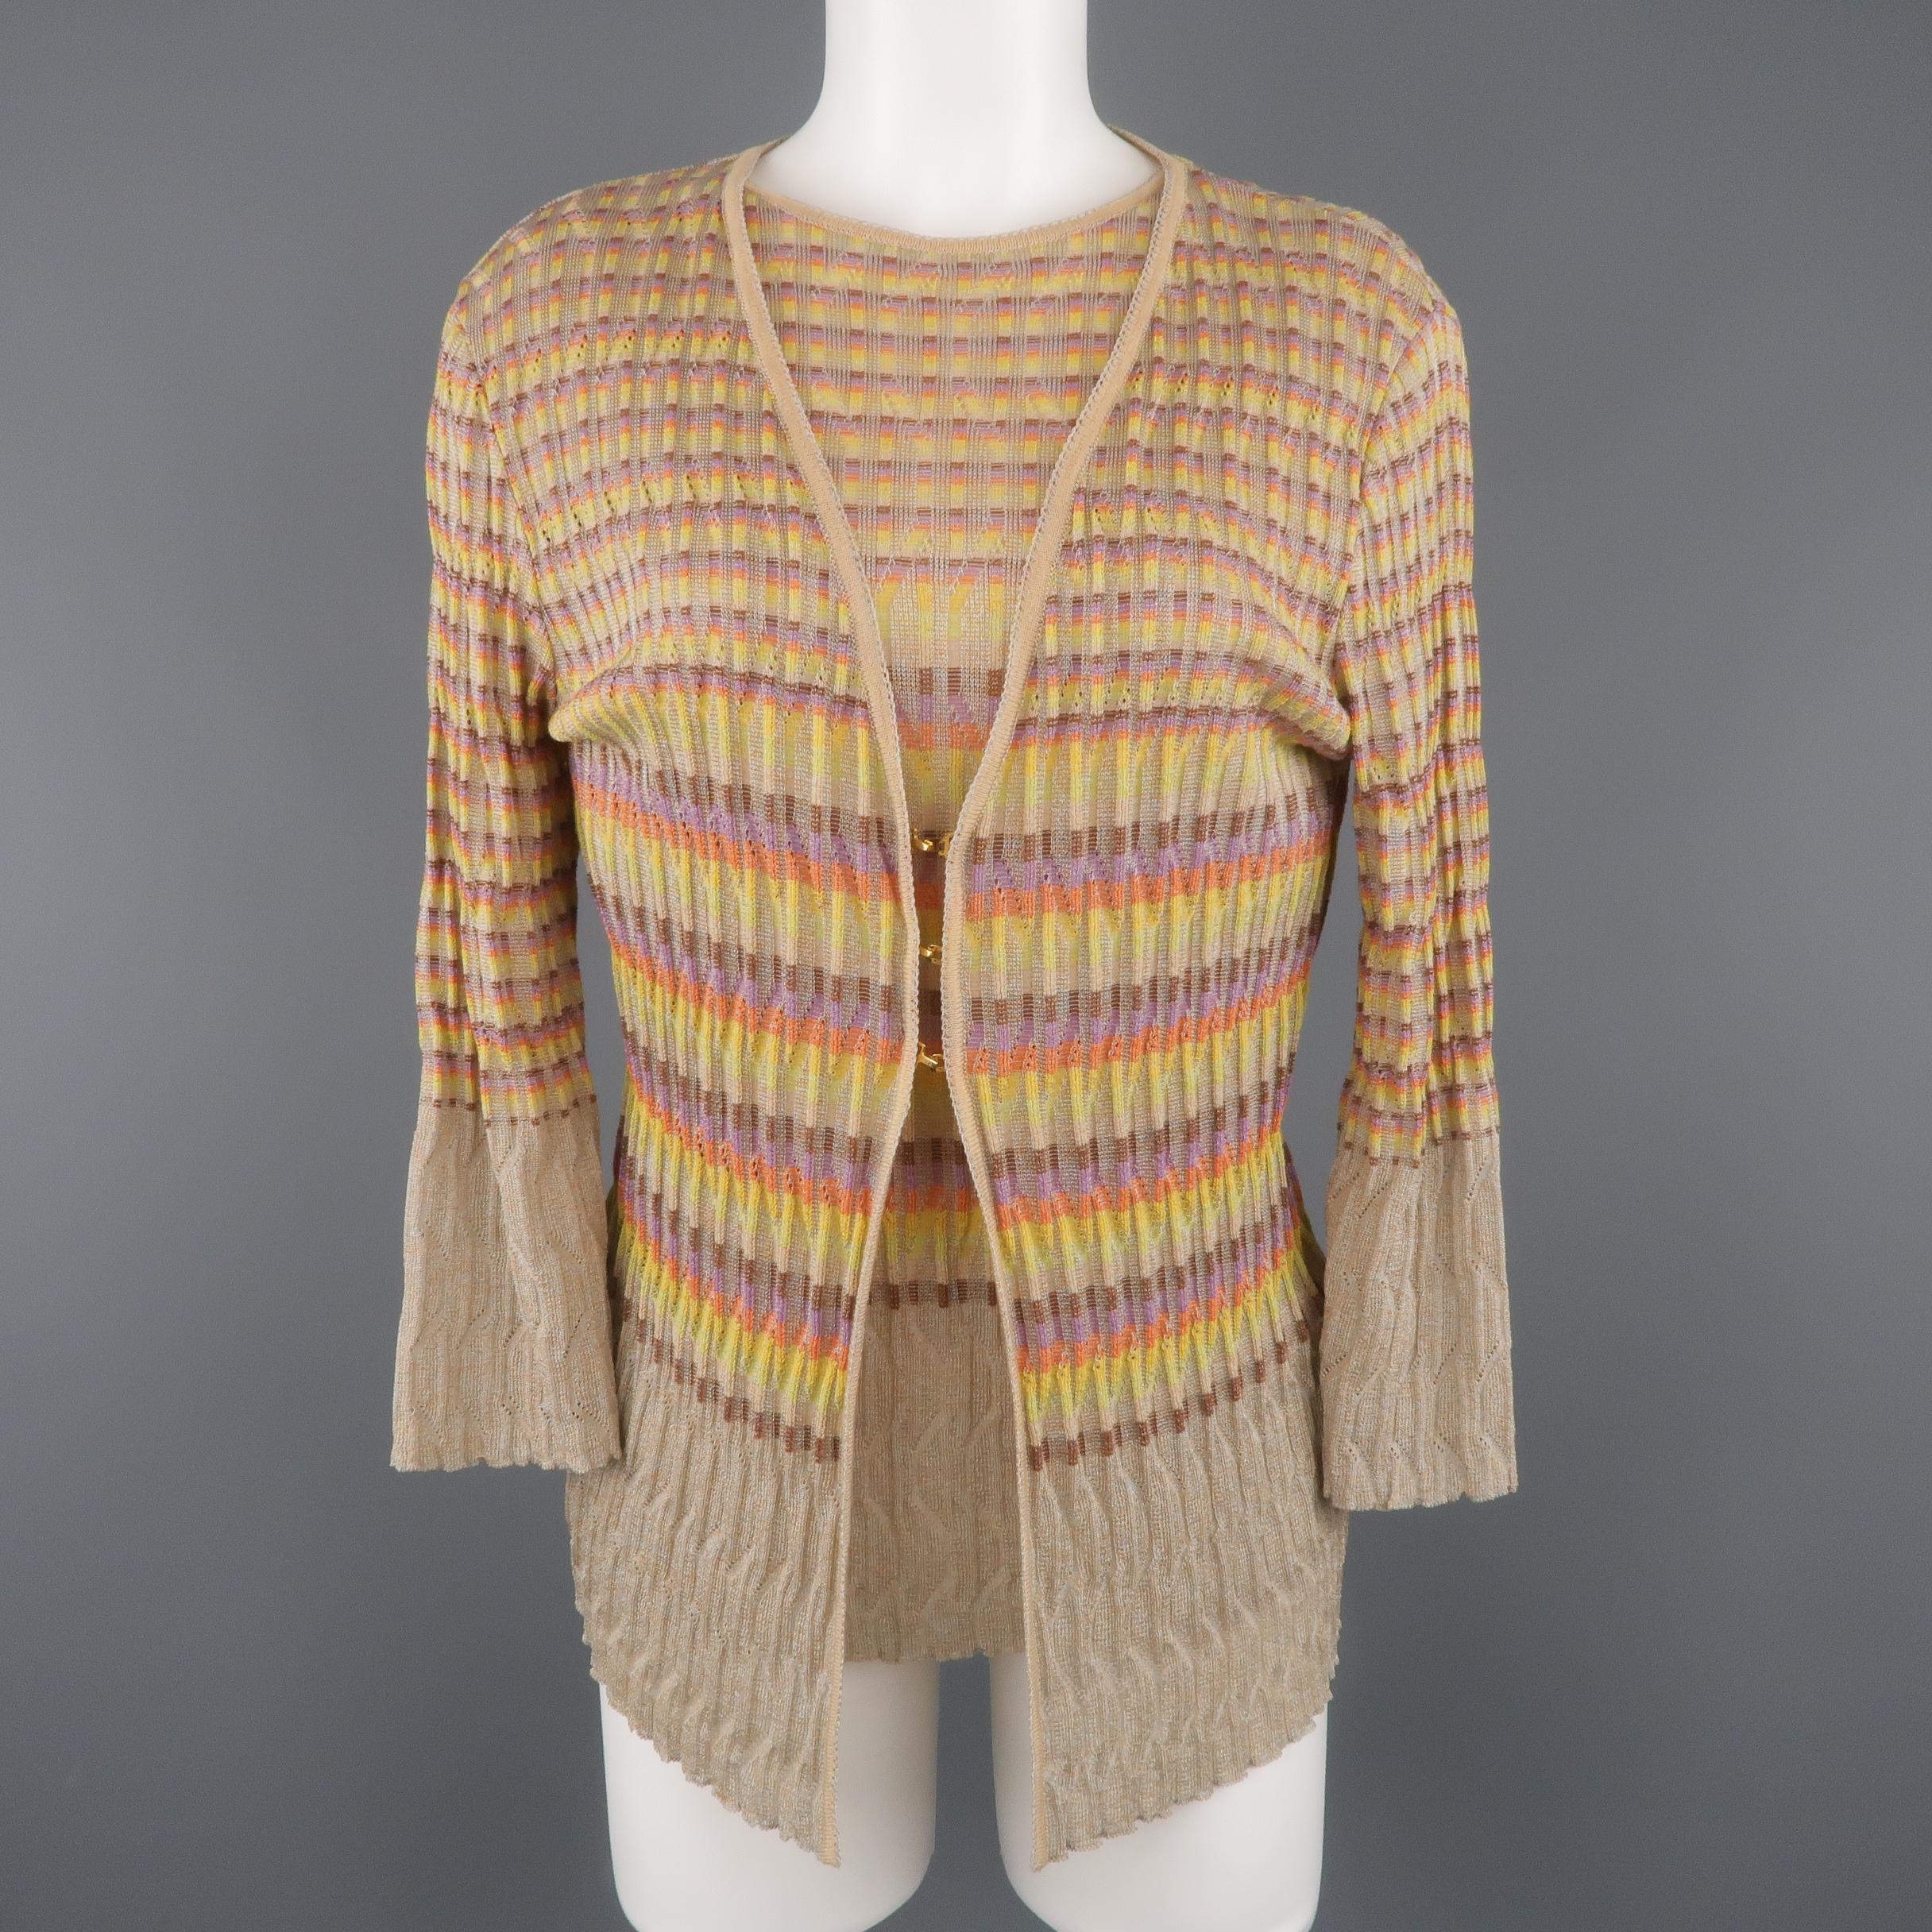 M MISSONI Size 14 Beige Rainbow Stripe Textured Metallic Knit Top 4